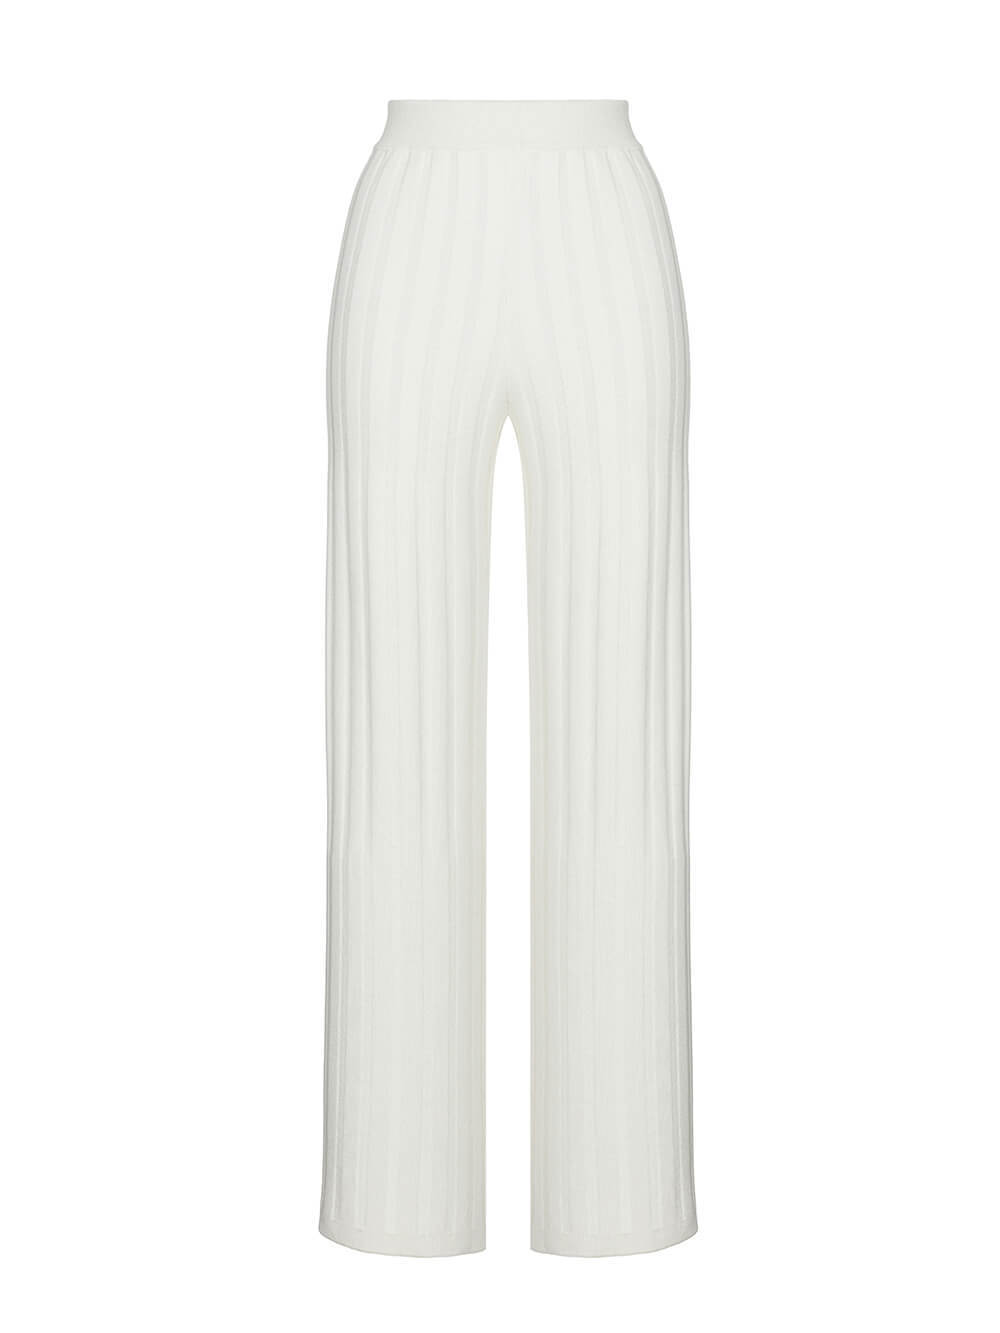 Женские брюки молочного цвета из шерсти и шелка - фото 1